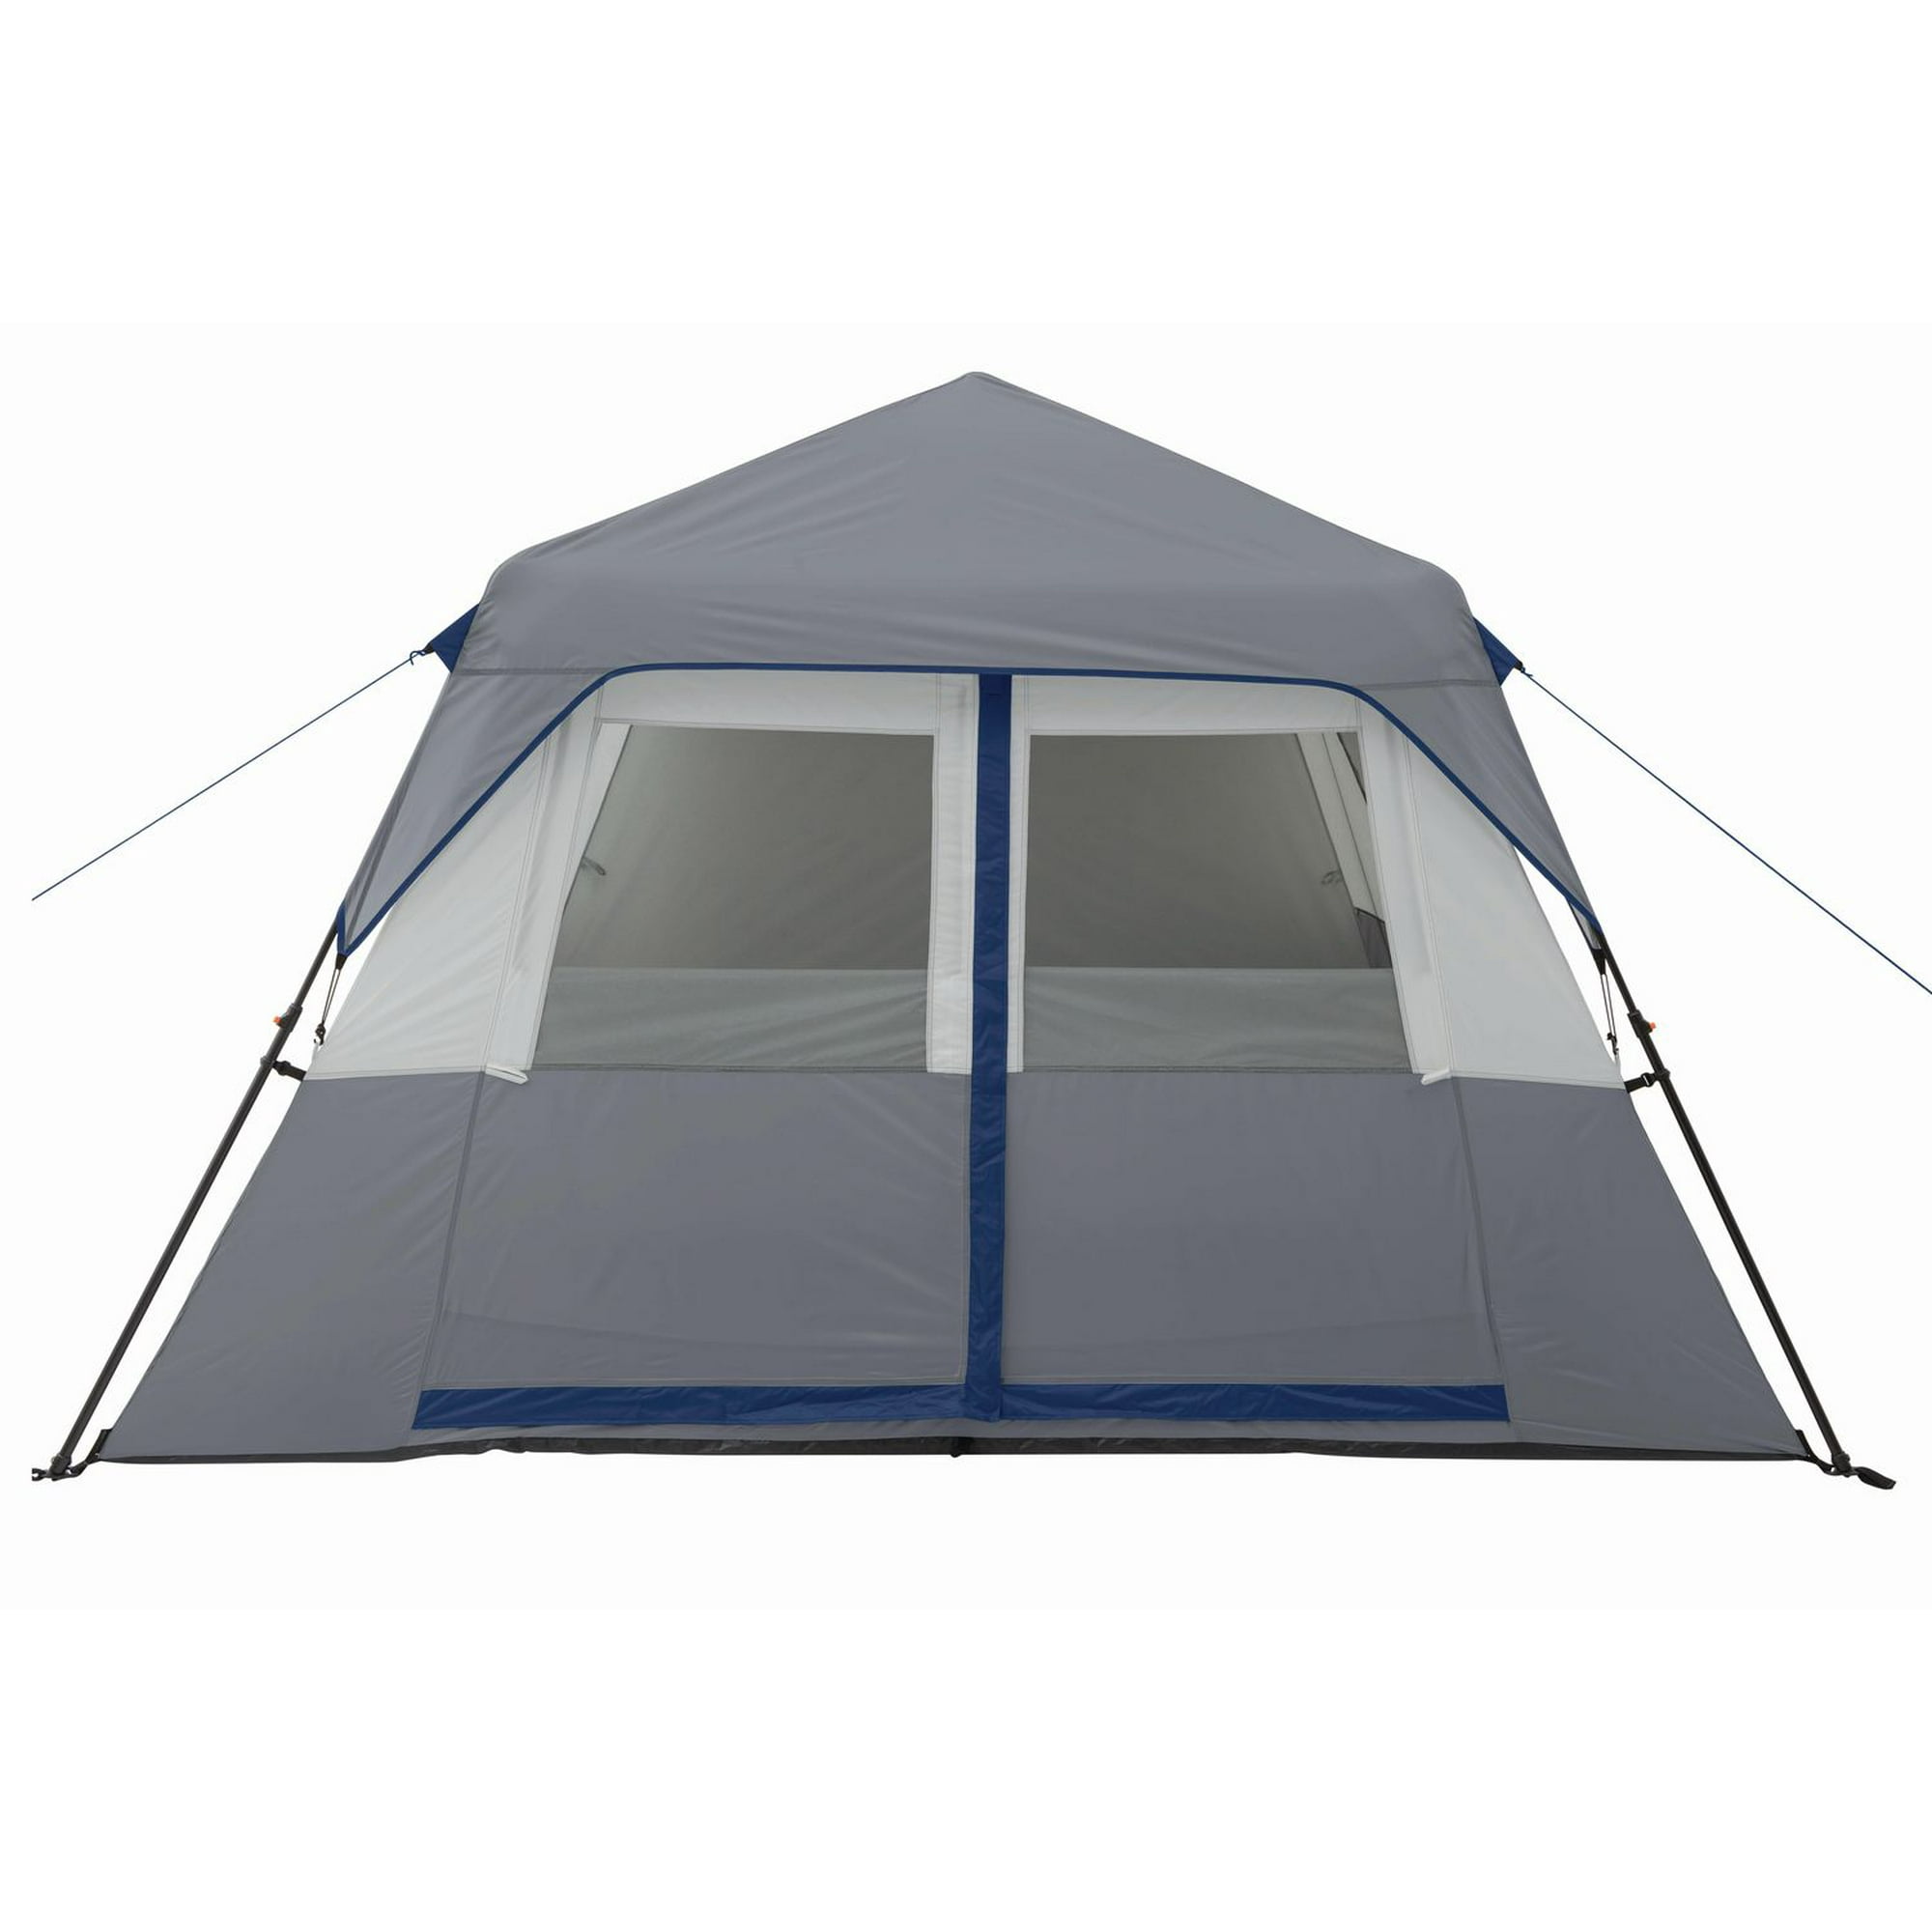 Ozark Trail 17' x 15' Person Instant Hexagon Cabin Tent, Sleeps 11 